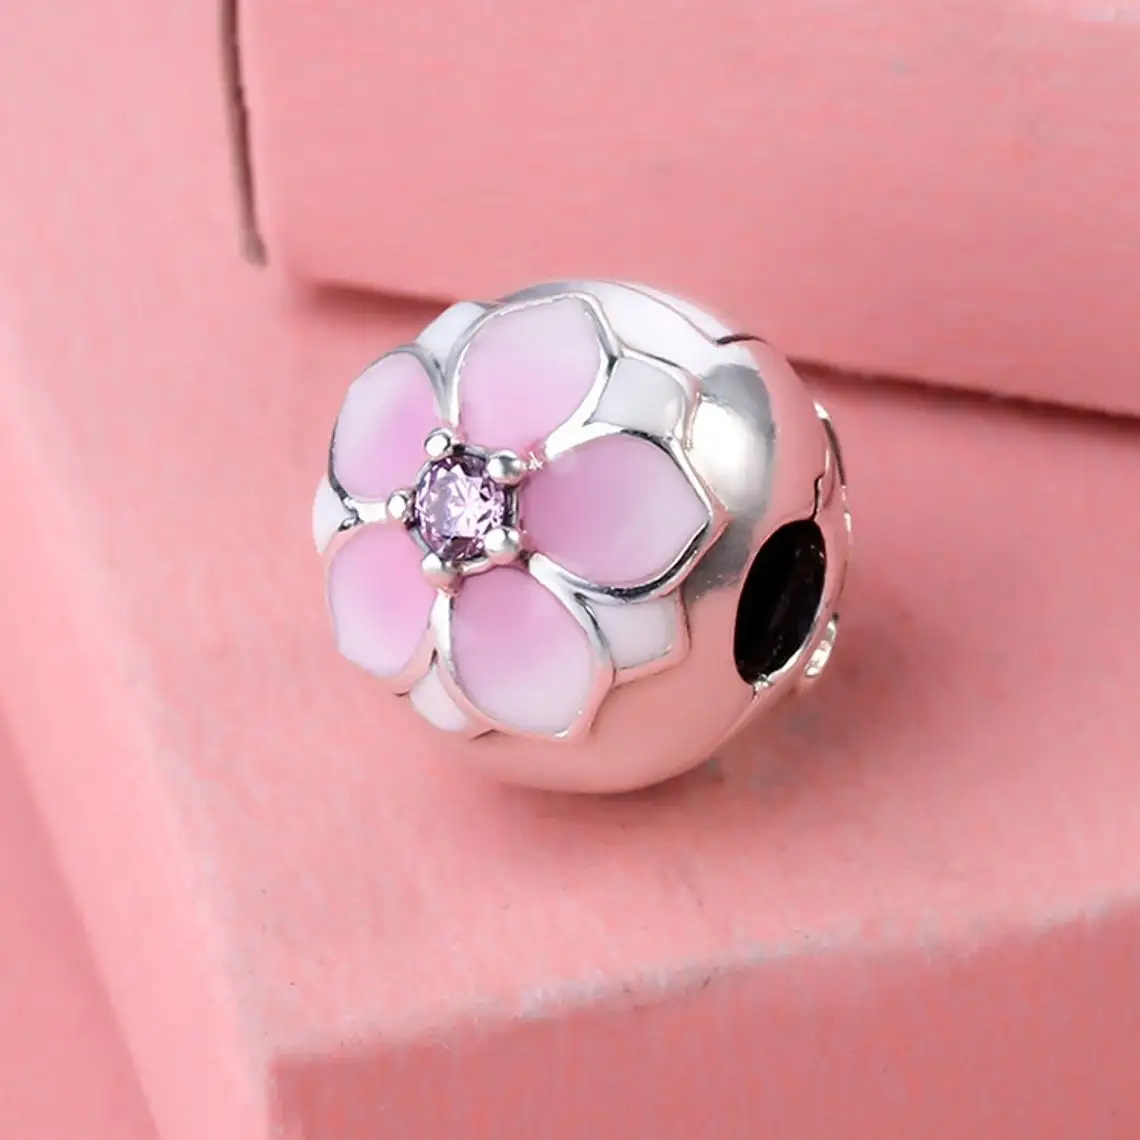 

925 Sterling Silver Magnolia Bloom Enamel & Pink CZ Clip Charm Bead Fits All European Pandora Jewelry Bracelets Necklaces